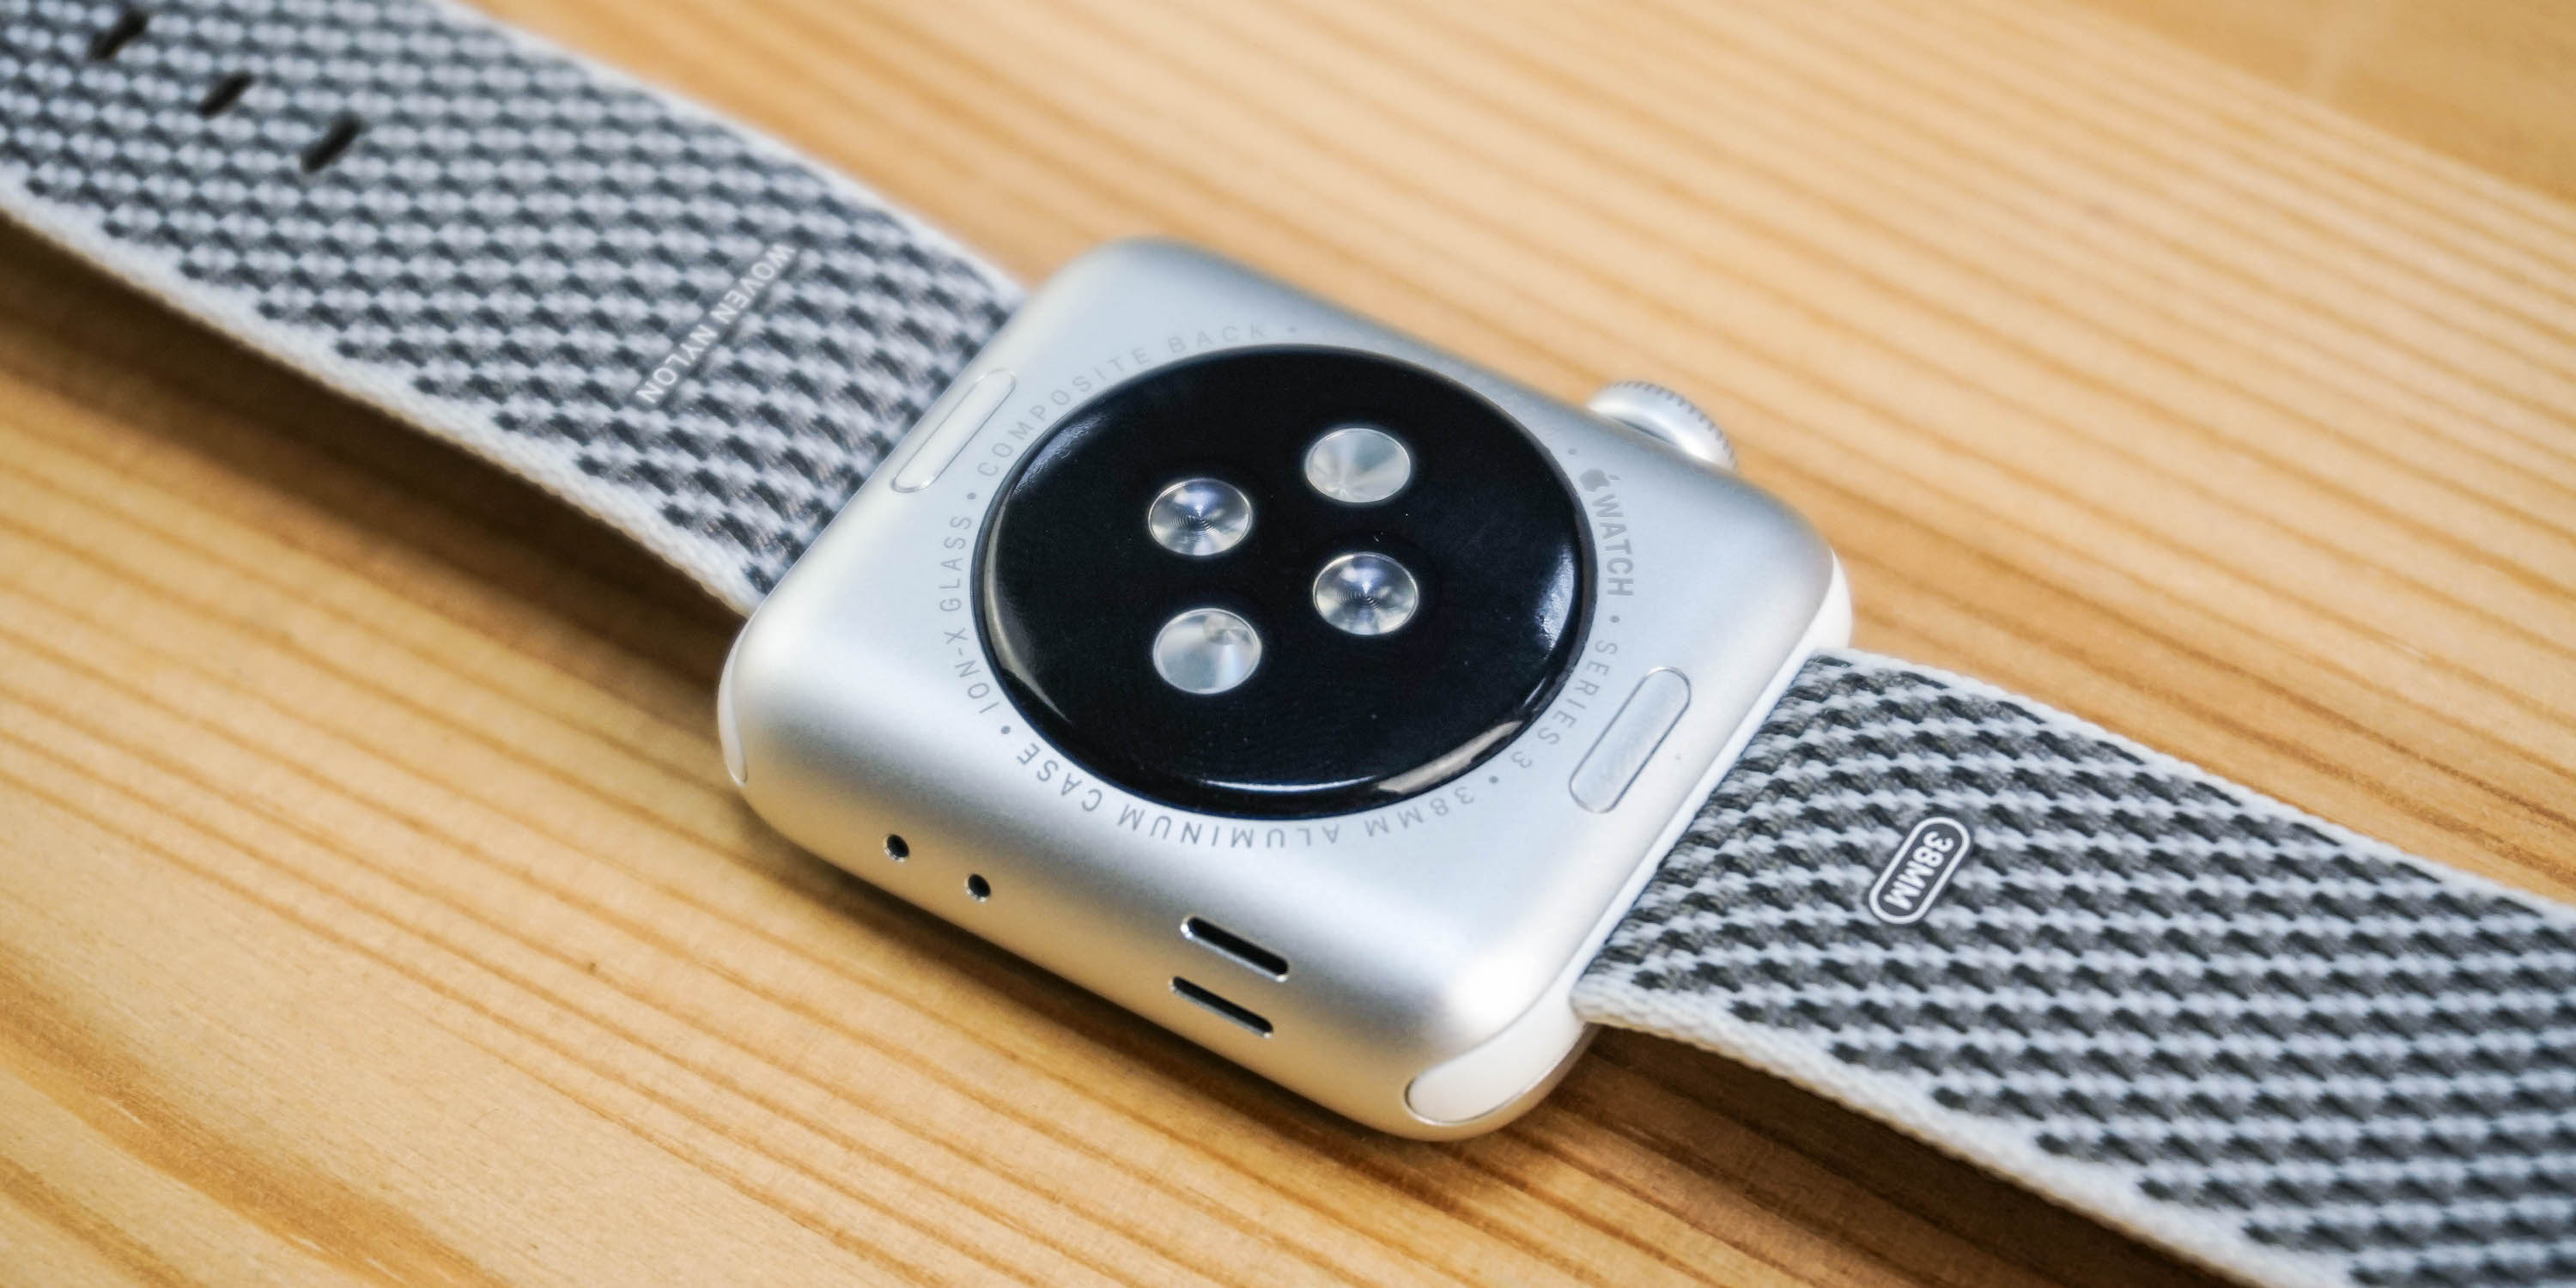 Watch series 9 45mm aluminium. WR-50m Apple watch Series 3. Часы ion-XGLASS. Watch Series 3 38mm Aluminum Case ion-x Glass Composite back GPS WR-50m. Apple.watch Series 3 отверстия динамика.